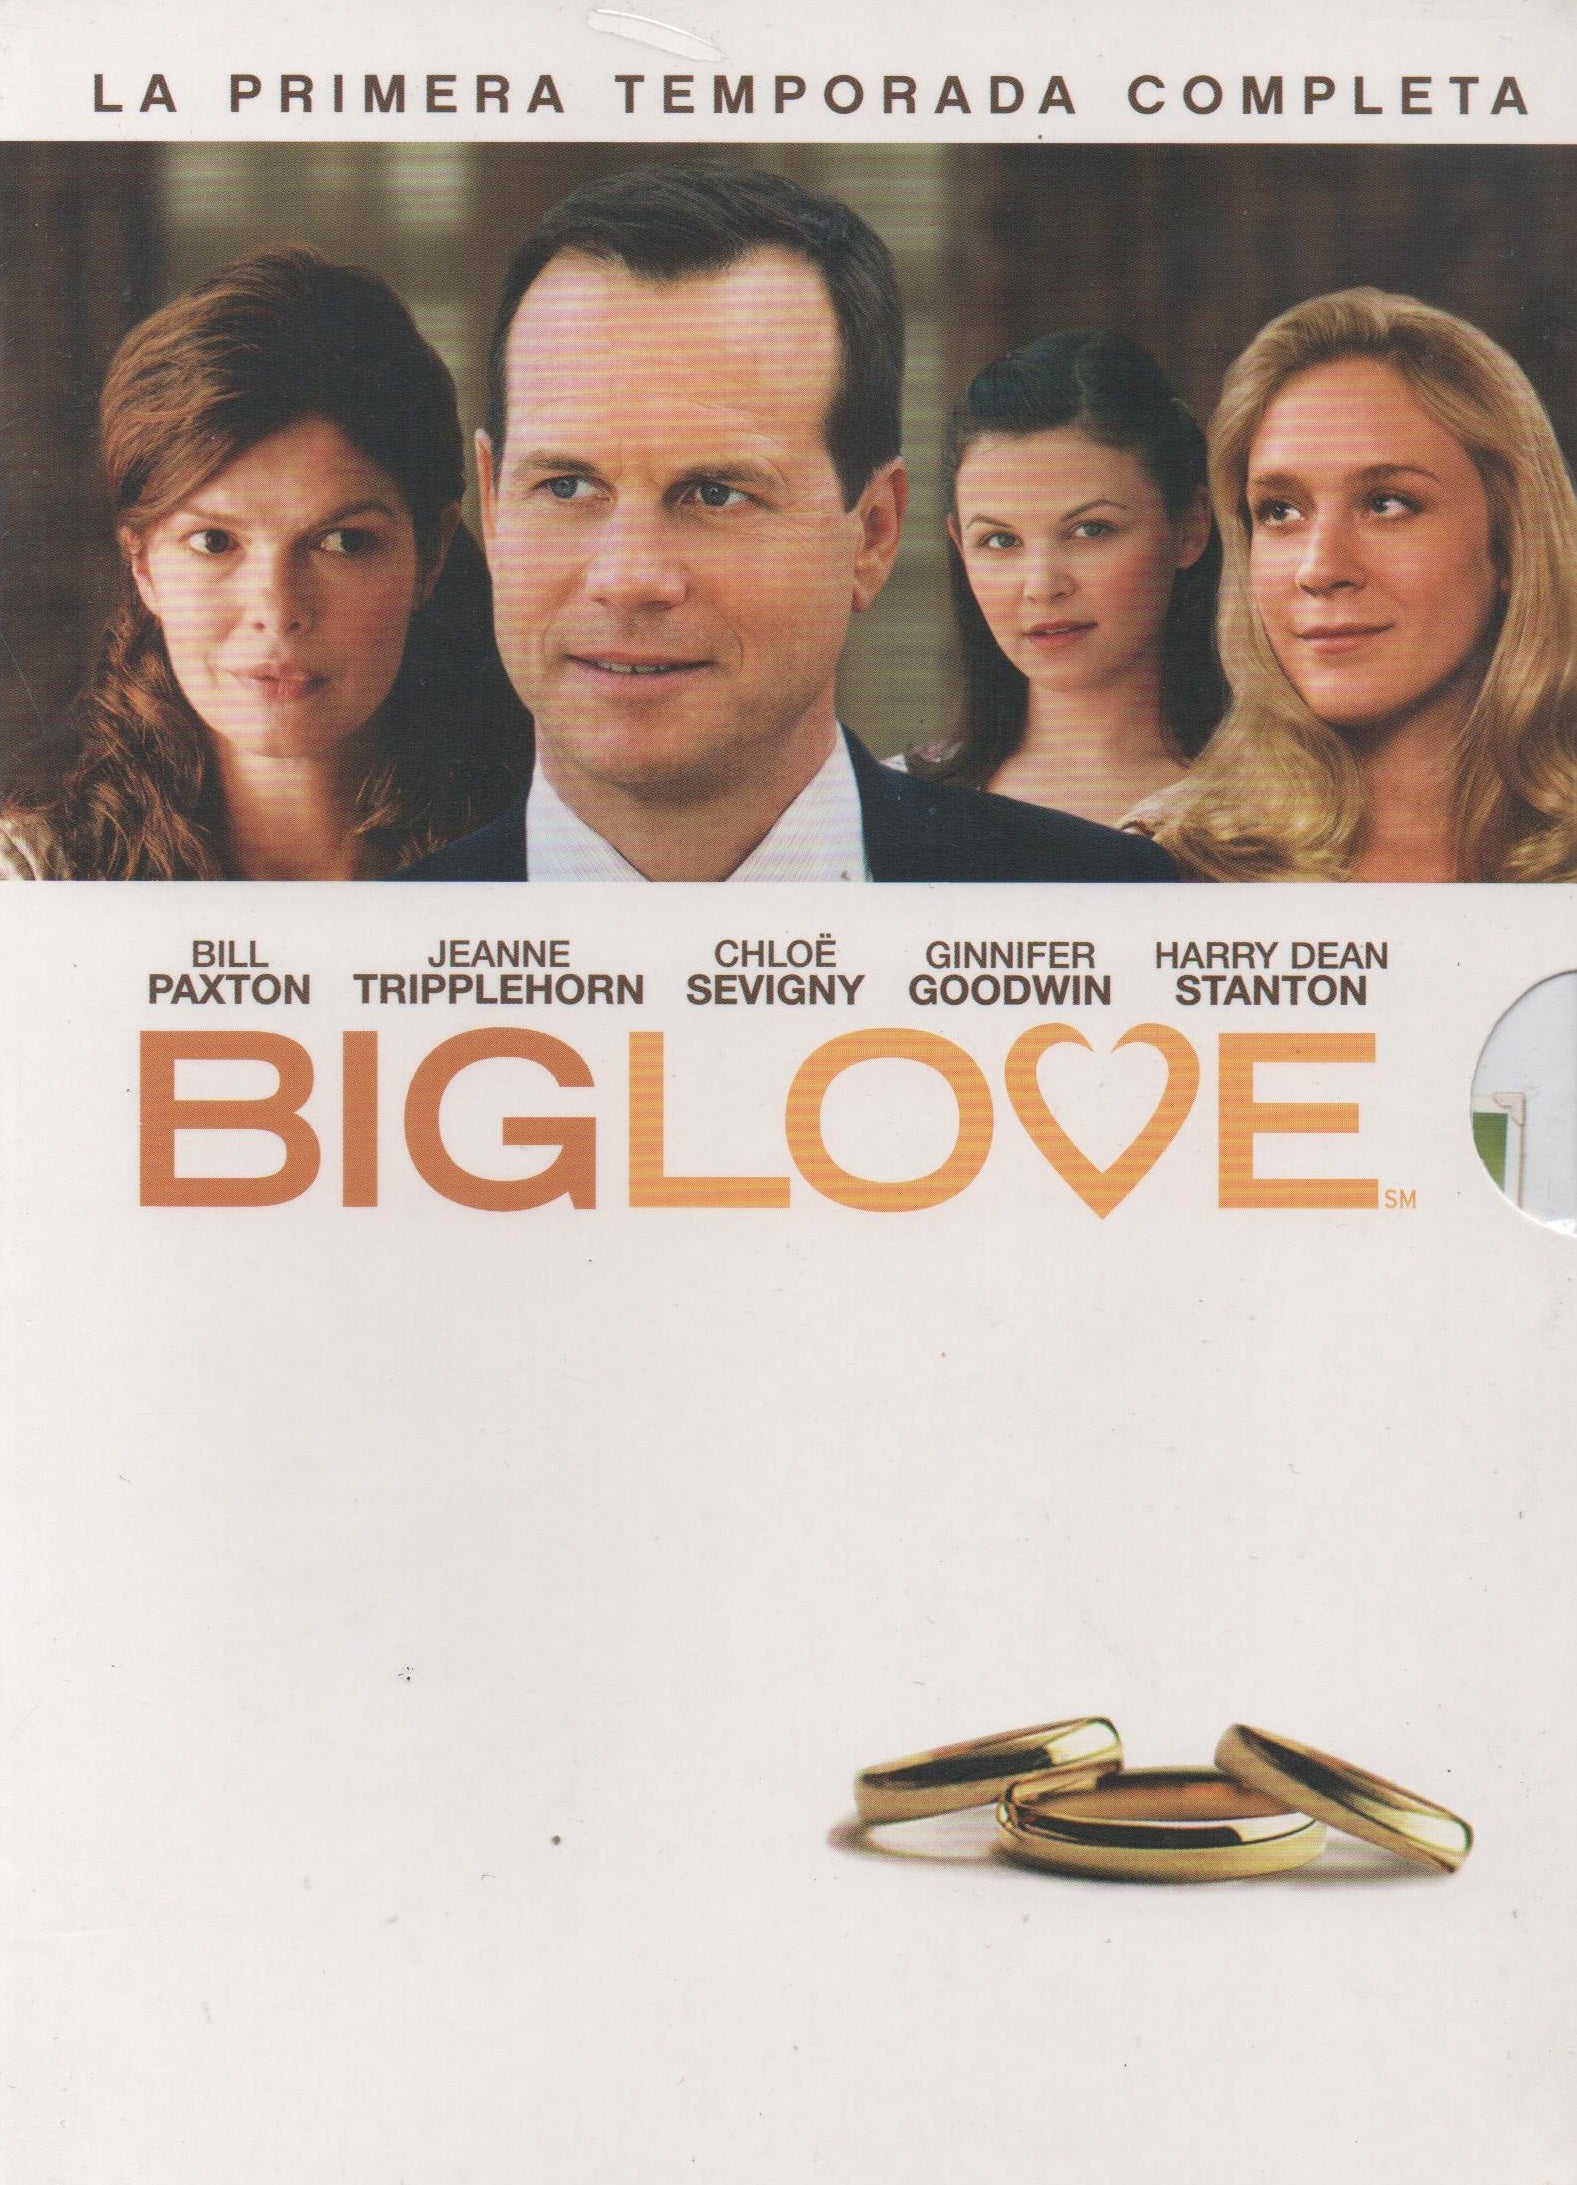 DVD x5 Big love - Primera temporada